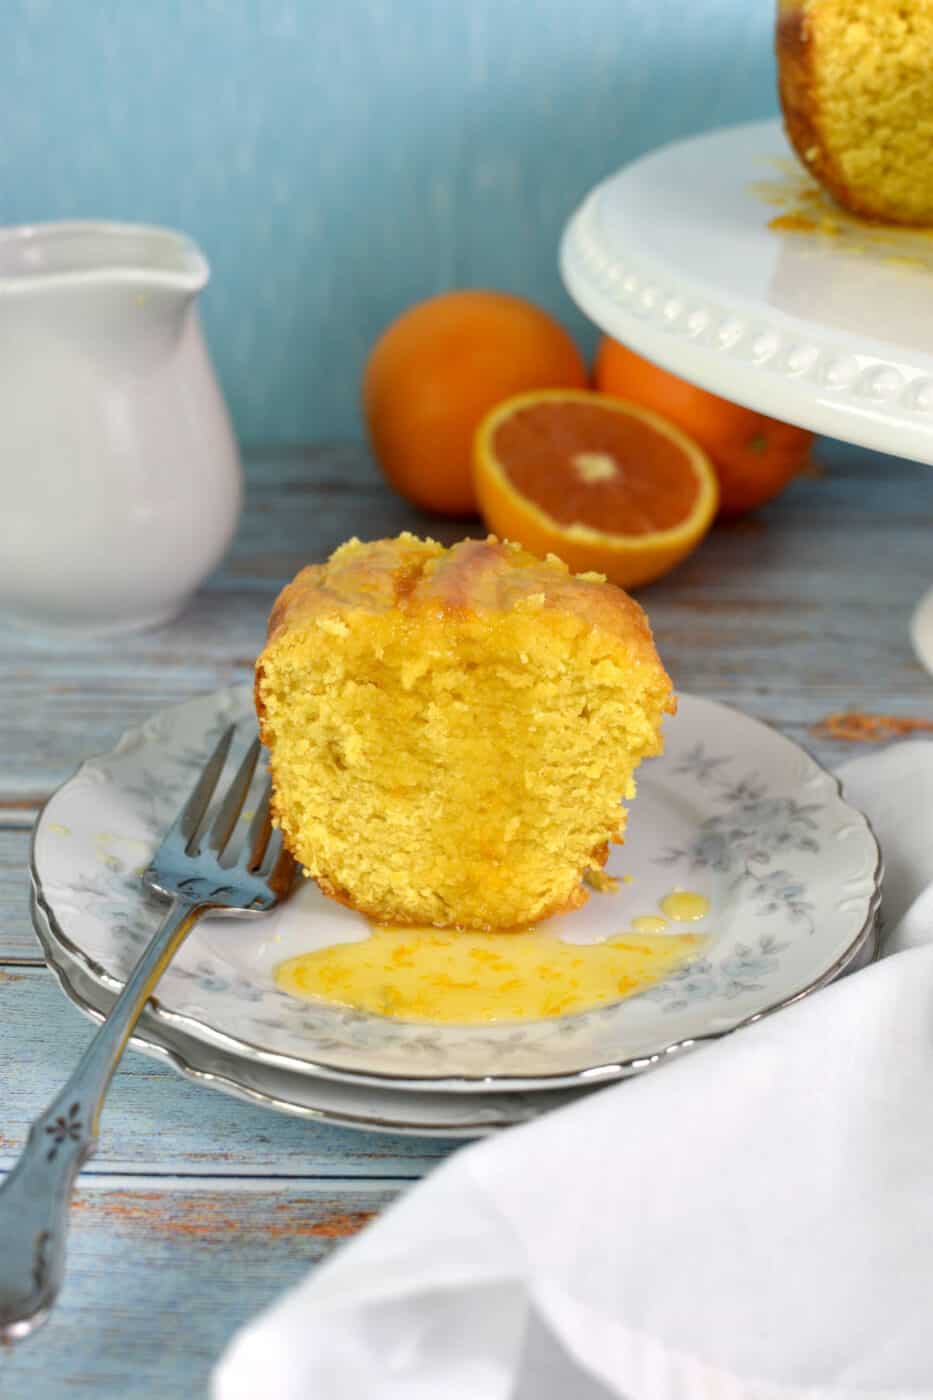 slice of orange cake on a plate with some orange glaze on it.